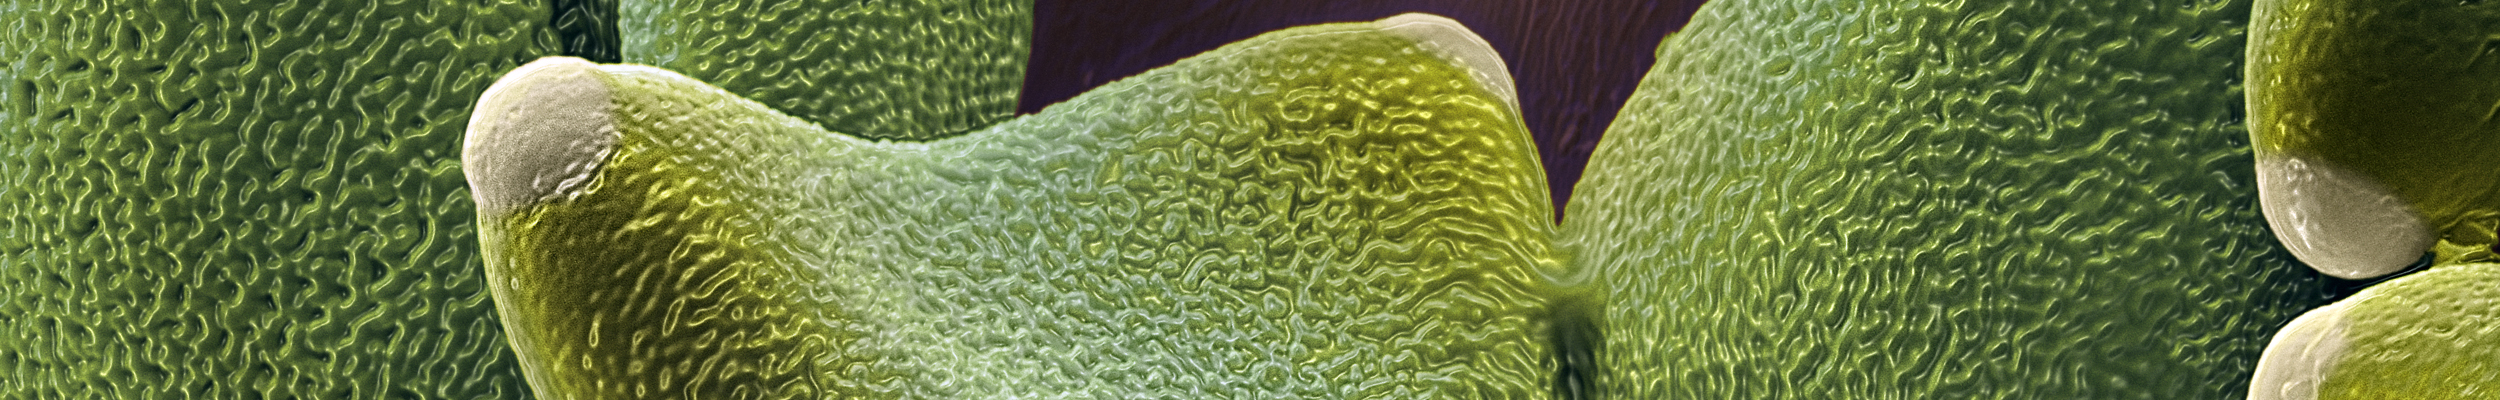 Micronaut Pollen Banksia 0012 horizontal2